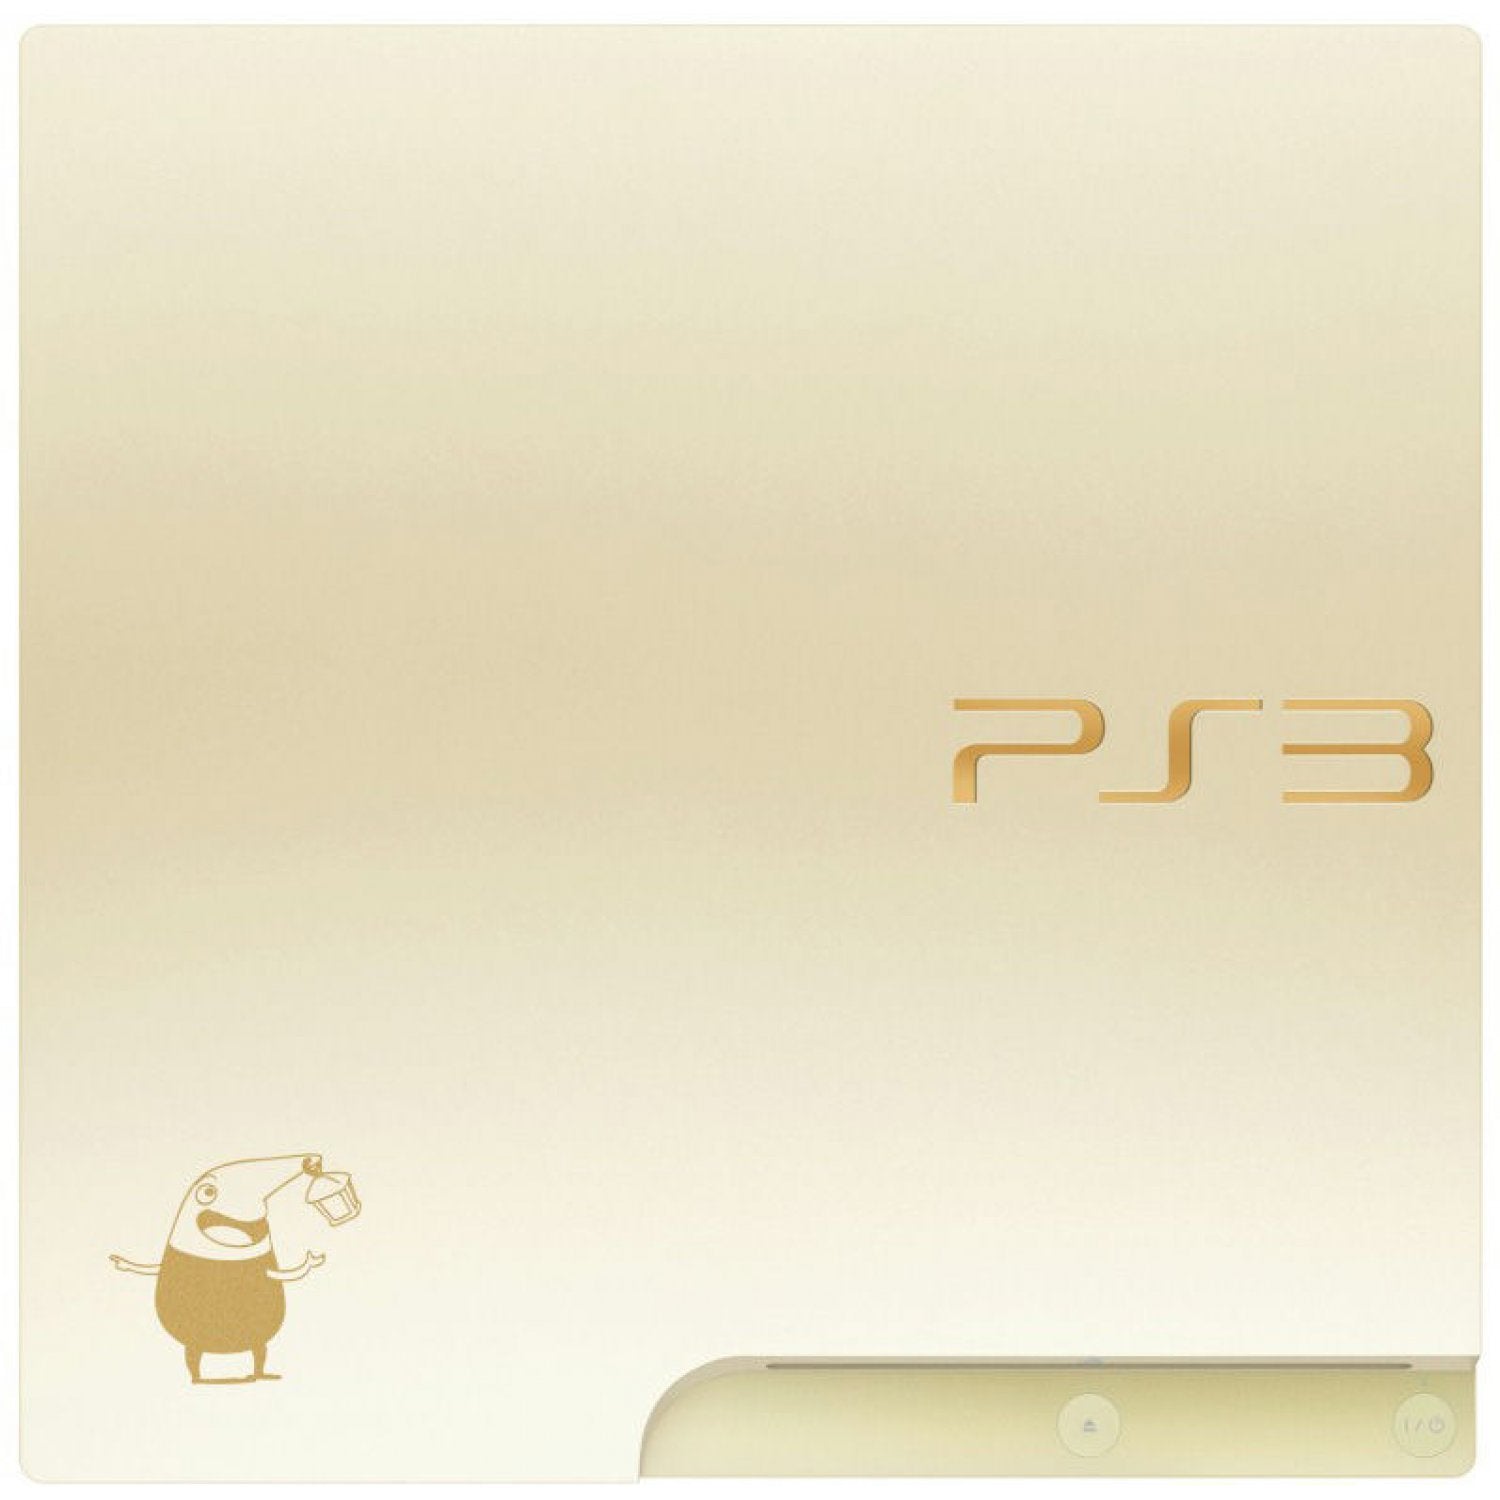 RetroPixl Sony Playstation 3 (PS3) Ni No Kuni Limited Edition